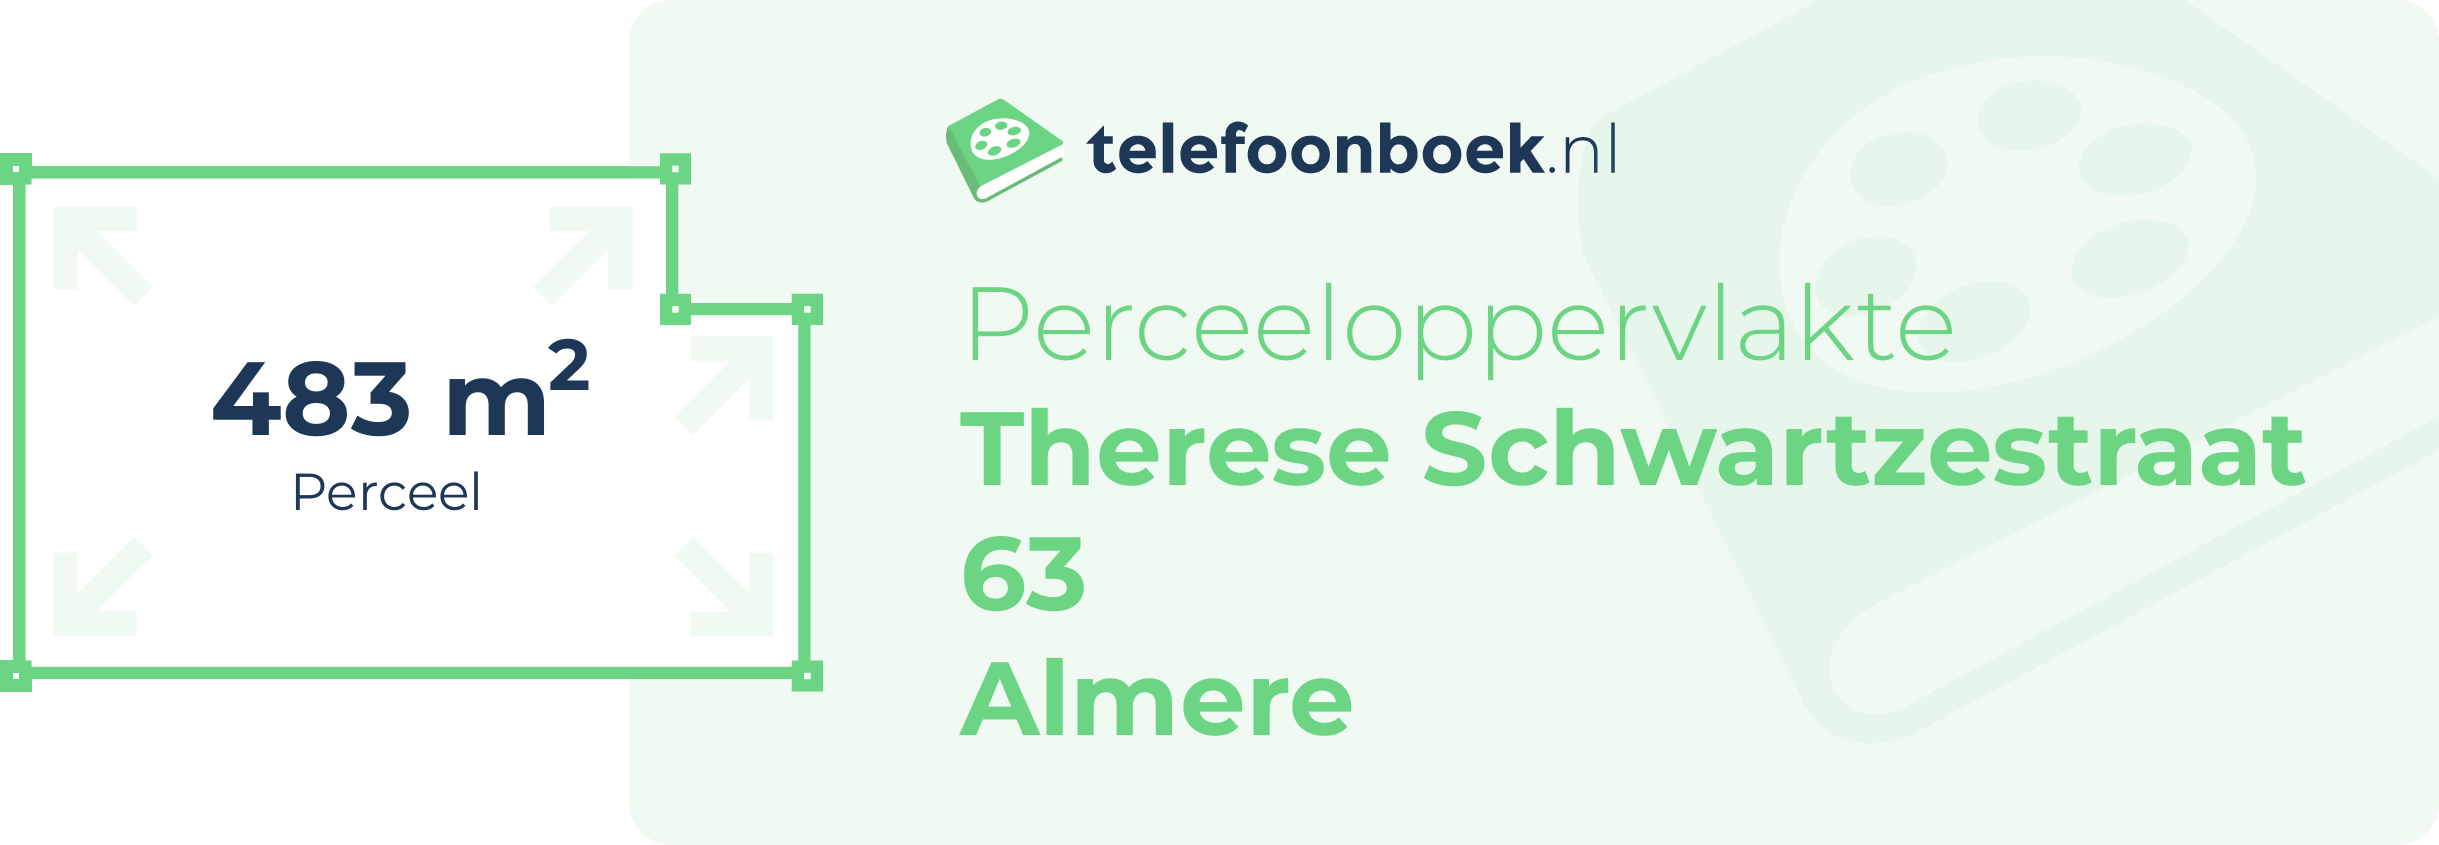 Perceeloppervlakte Therese Schwartzestraat 63 Almere